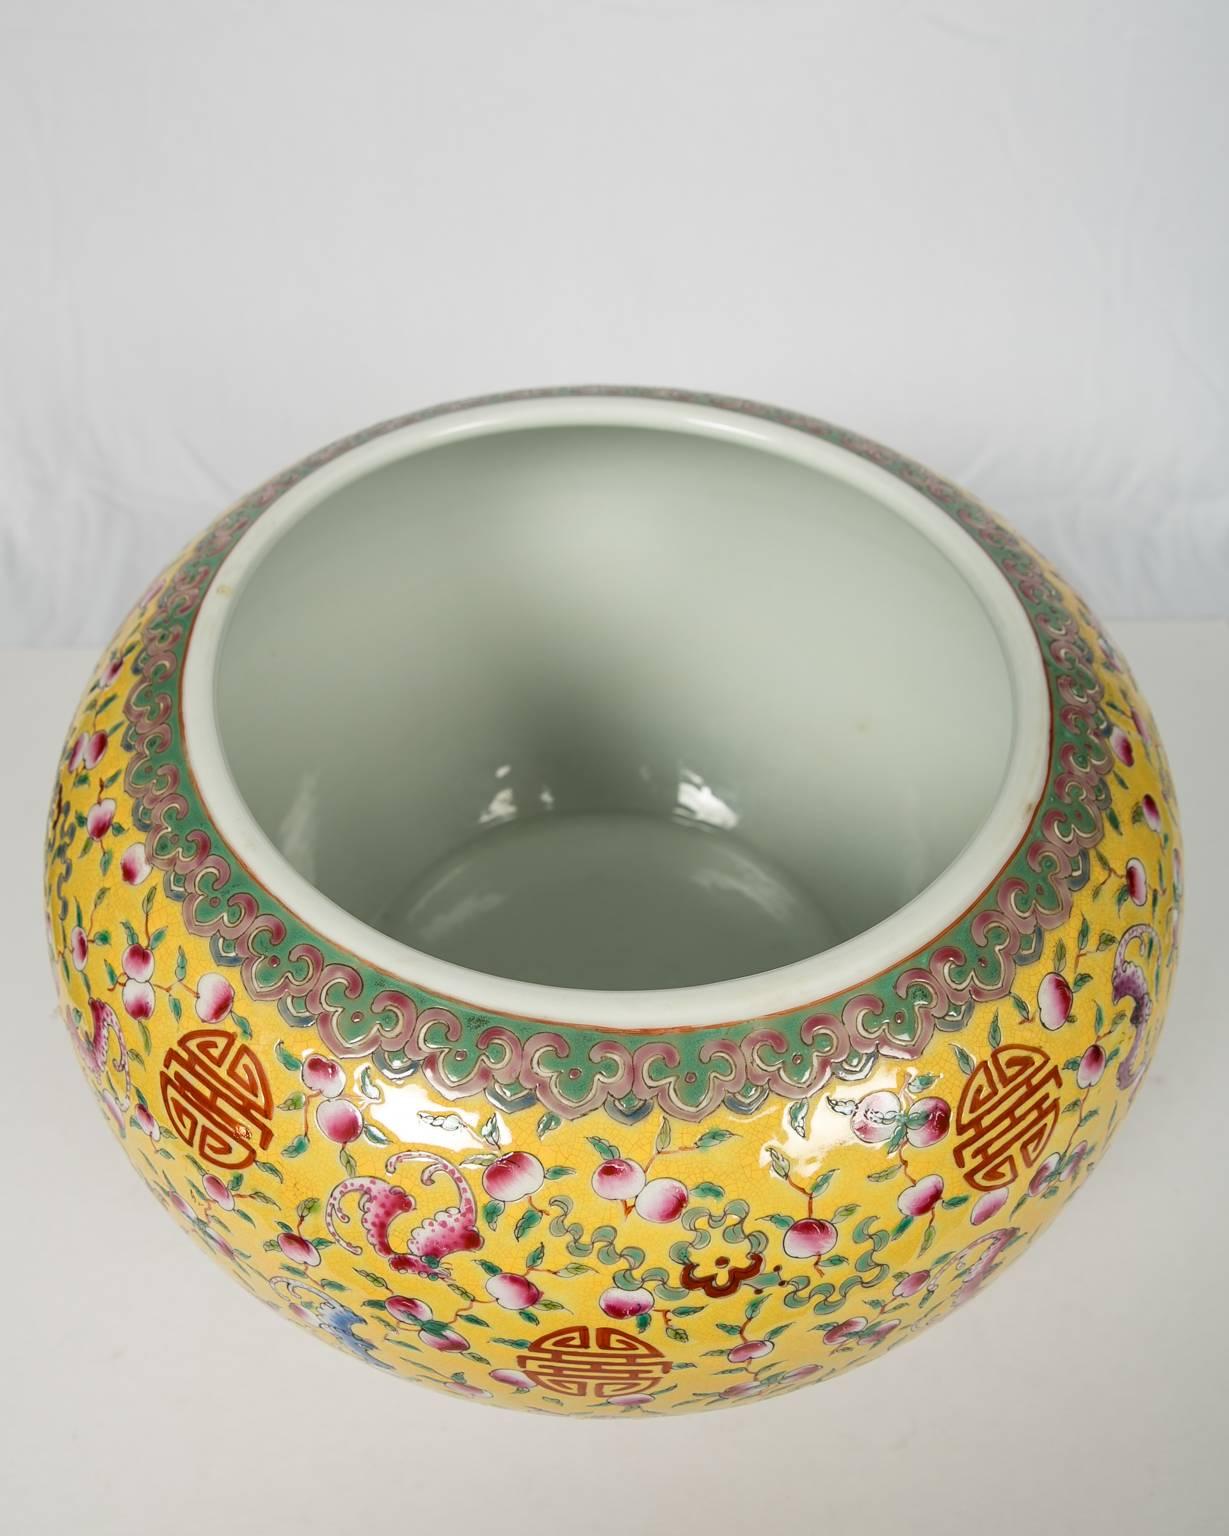 Porcelain Famille Rose Fish Bowl with Longevity Symbols